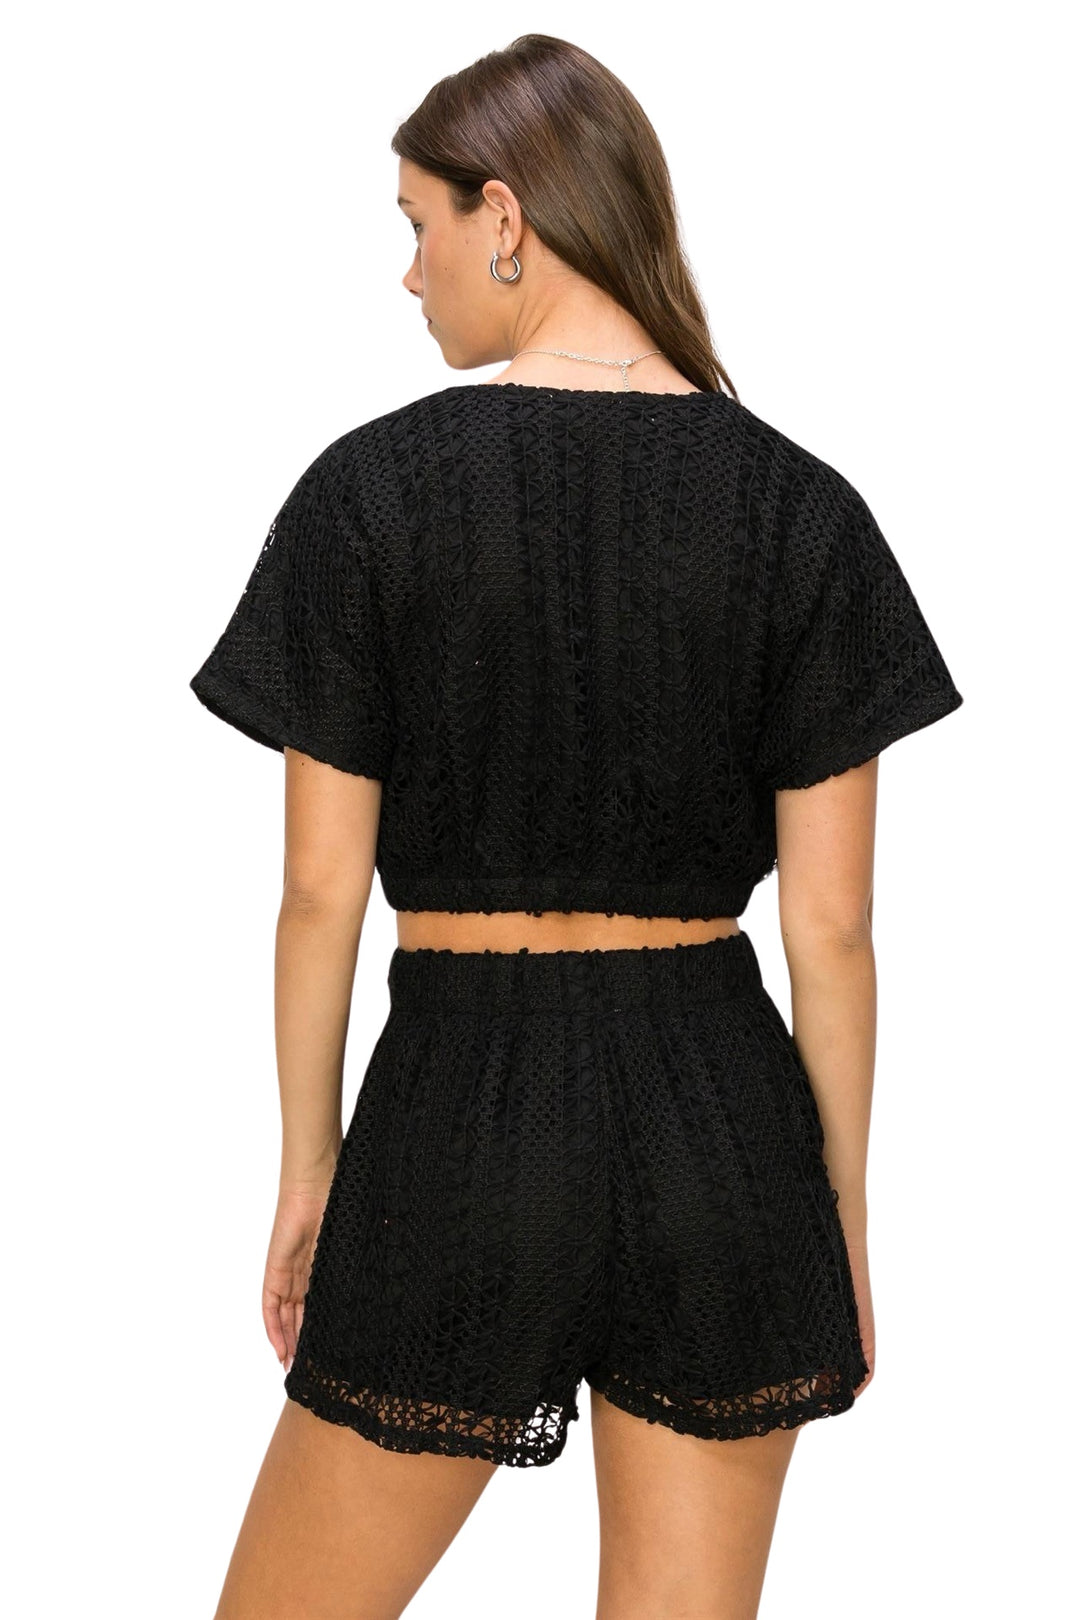 Bohemian Love Crochet Black Shorts